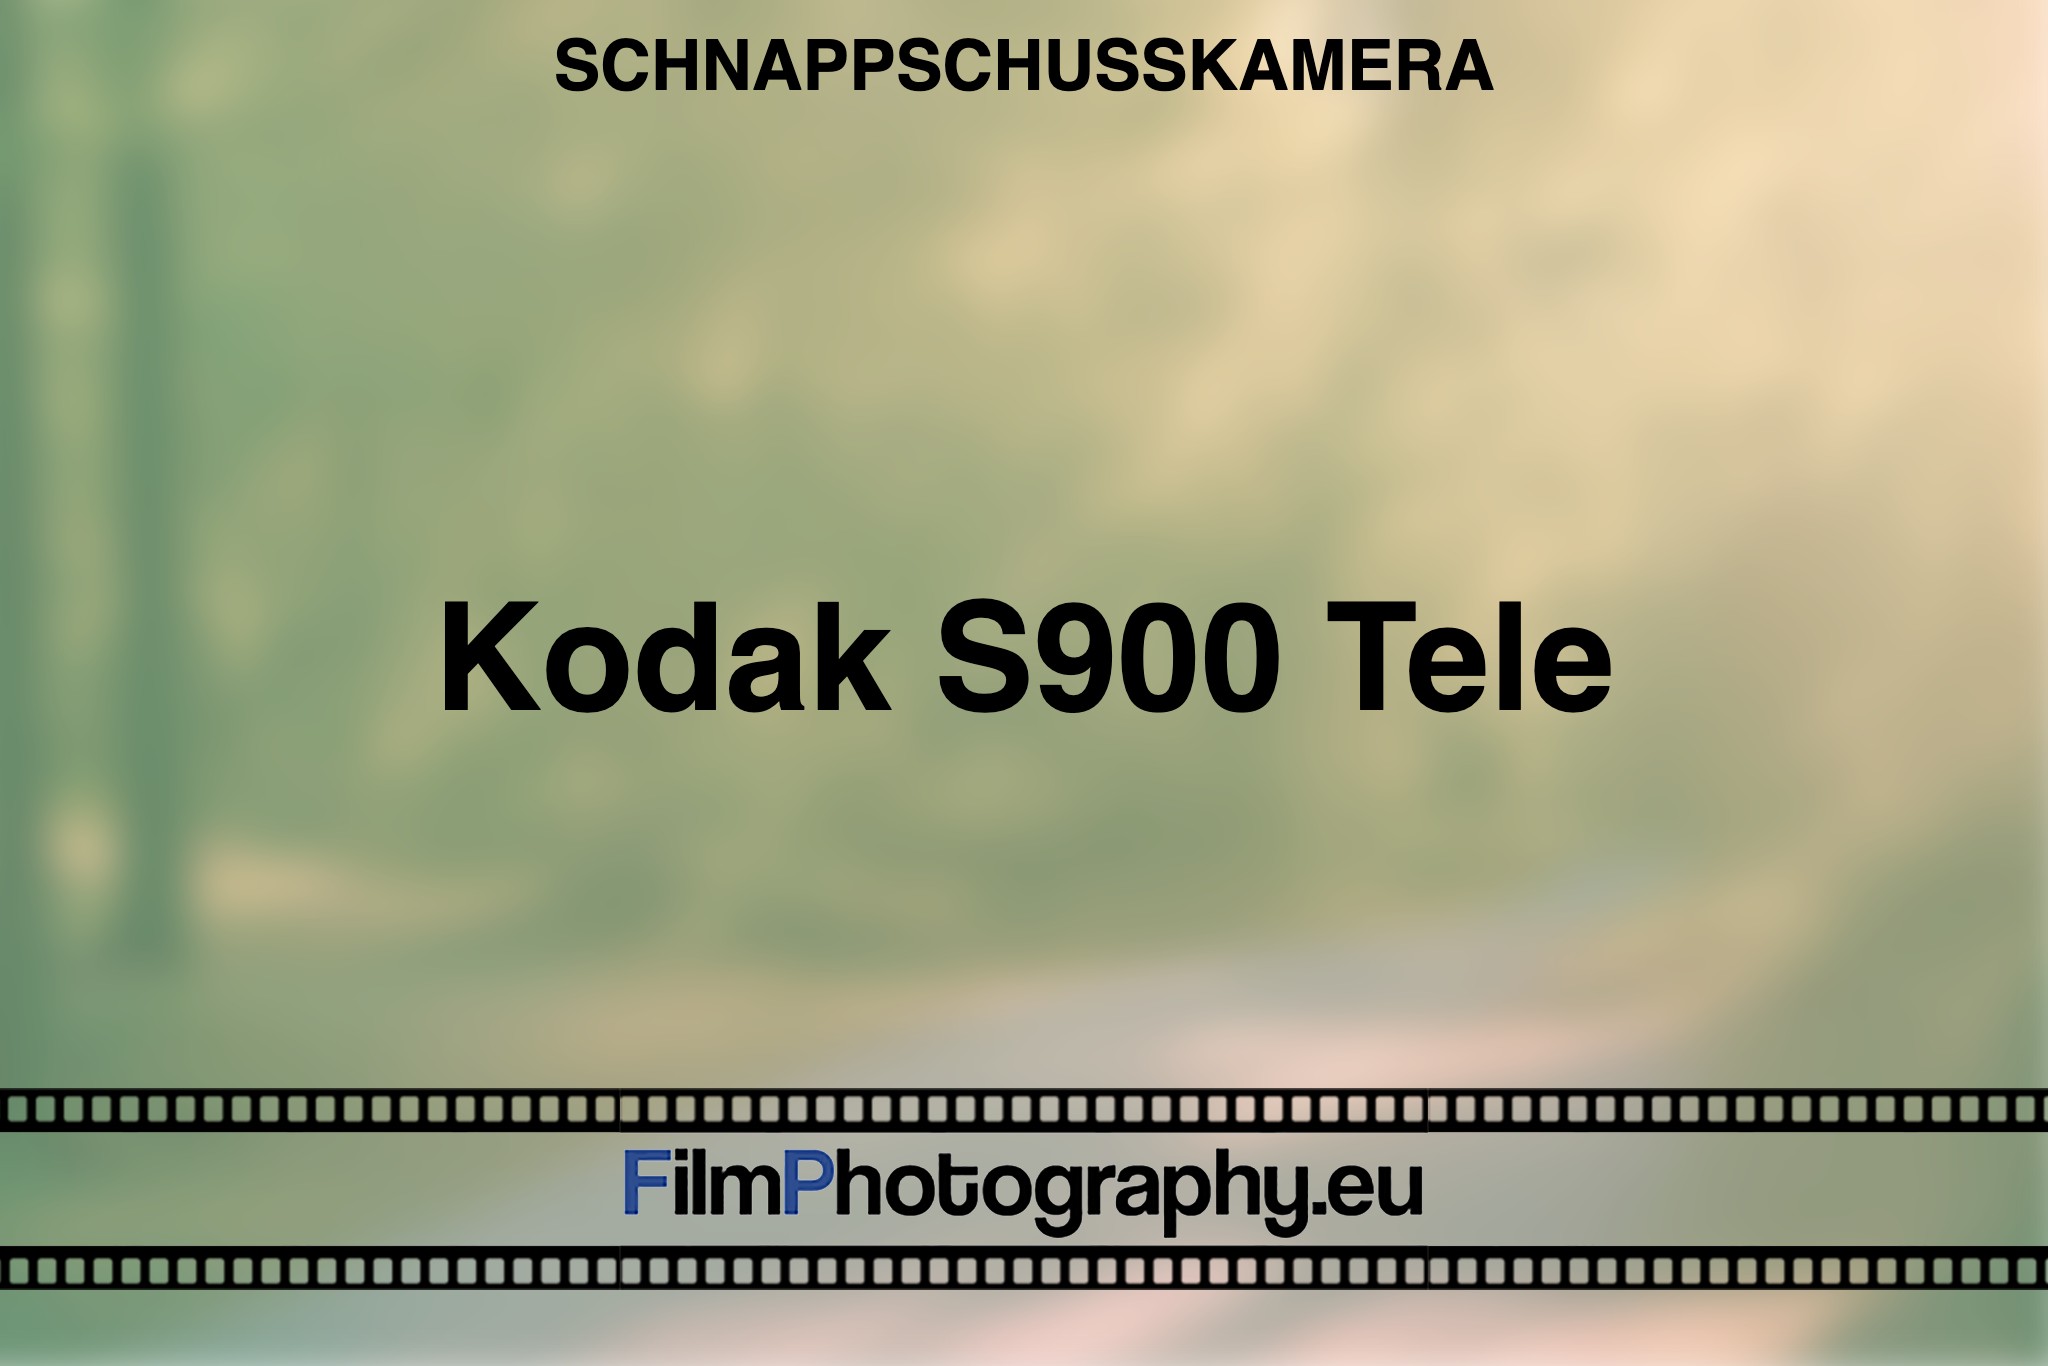 kodak-s900-tele-schnappschusskamera-bnv